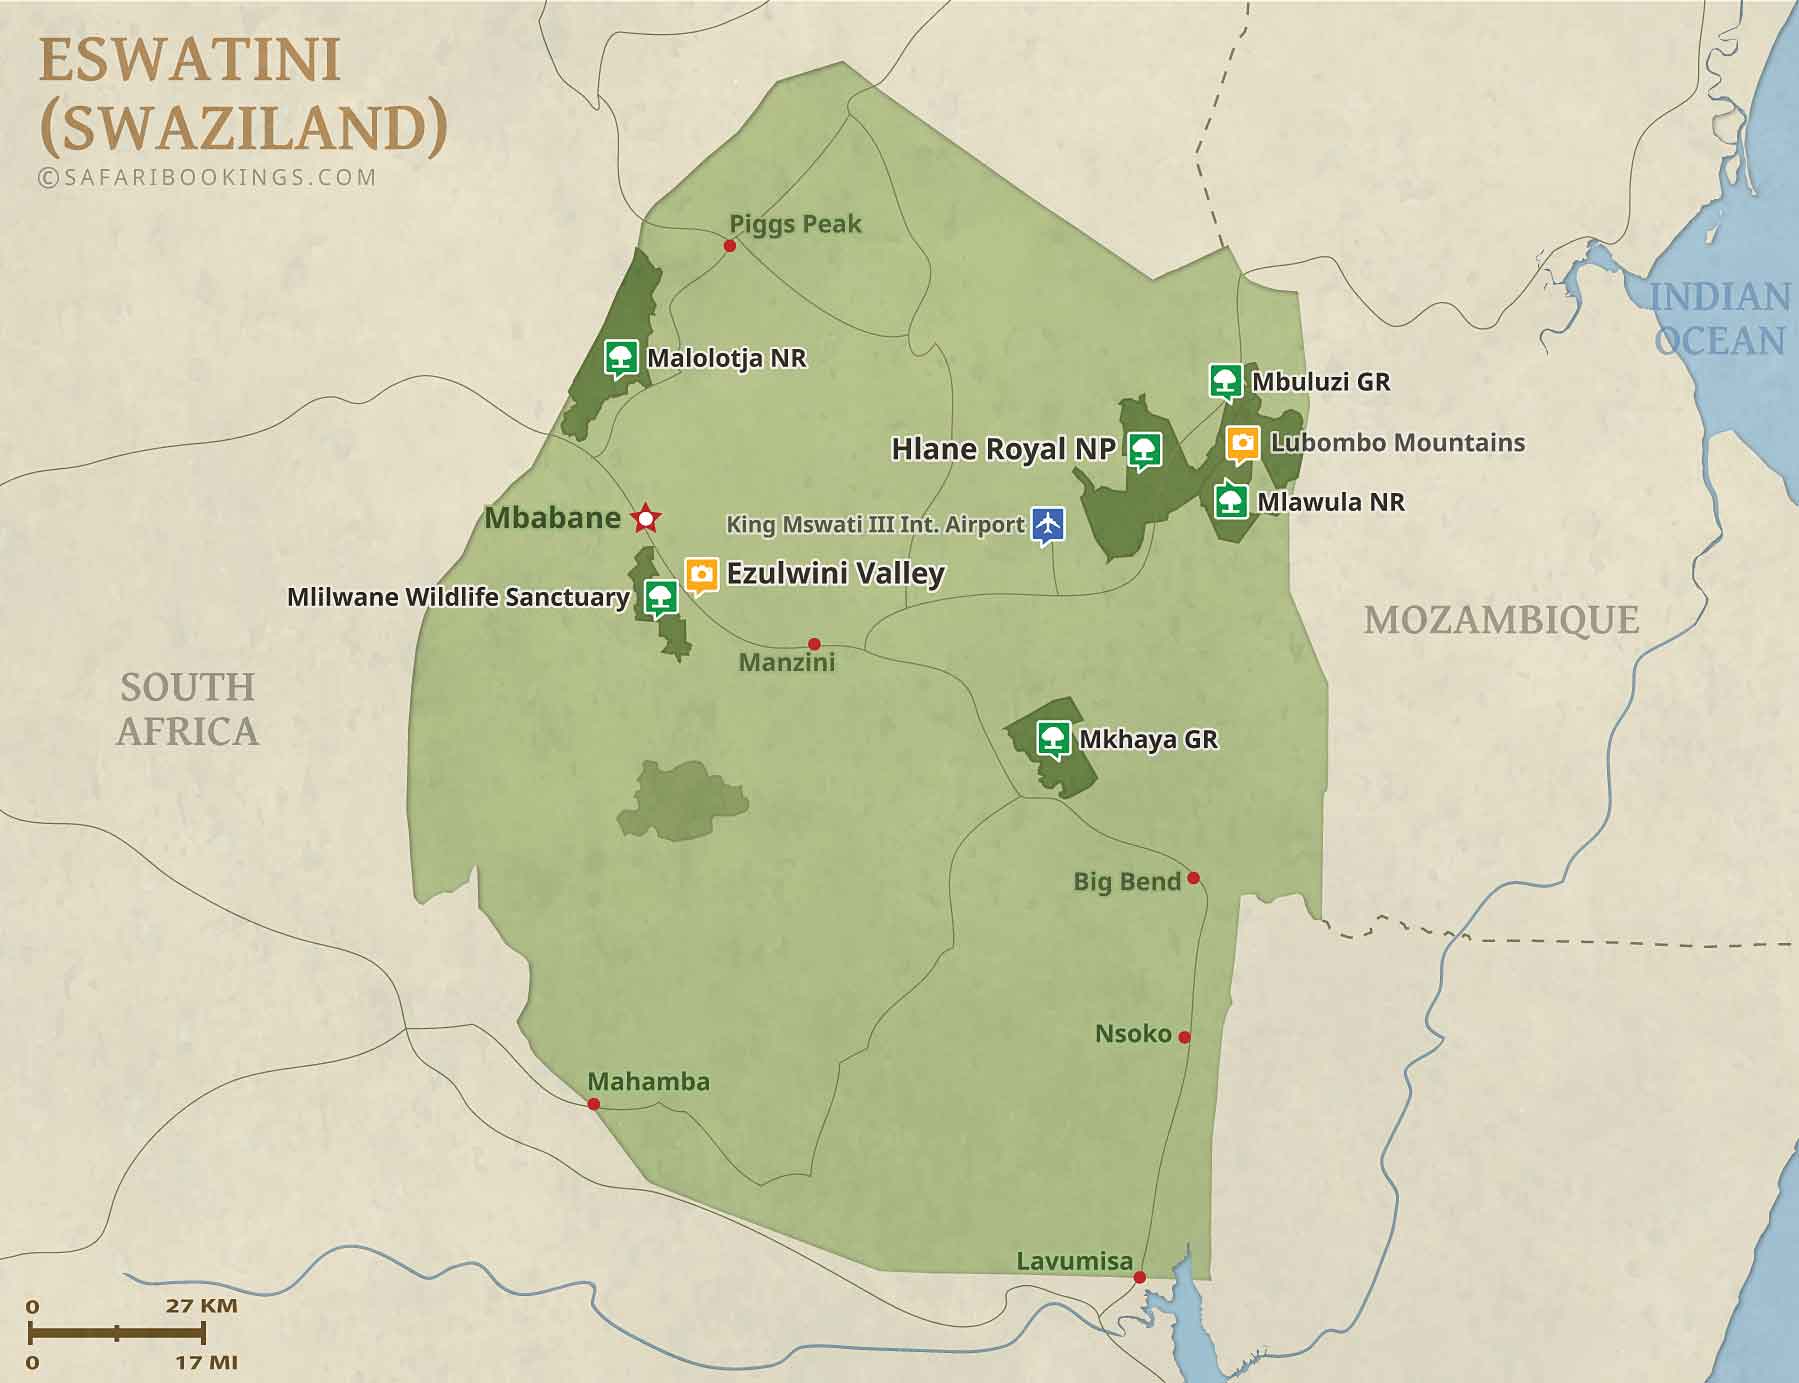 Popular Routes in Eswatini